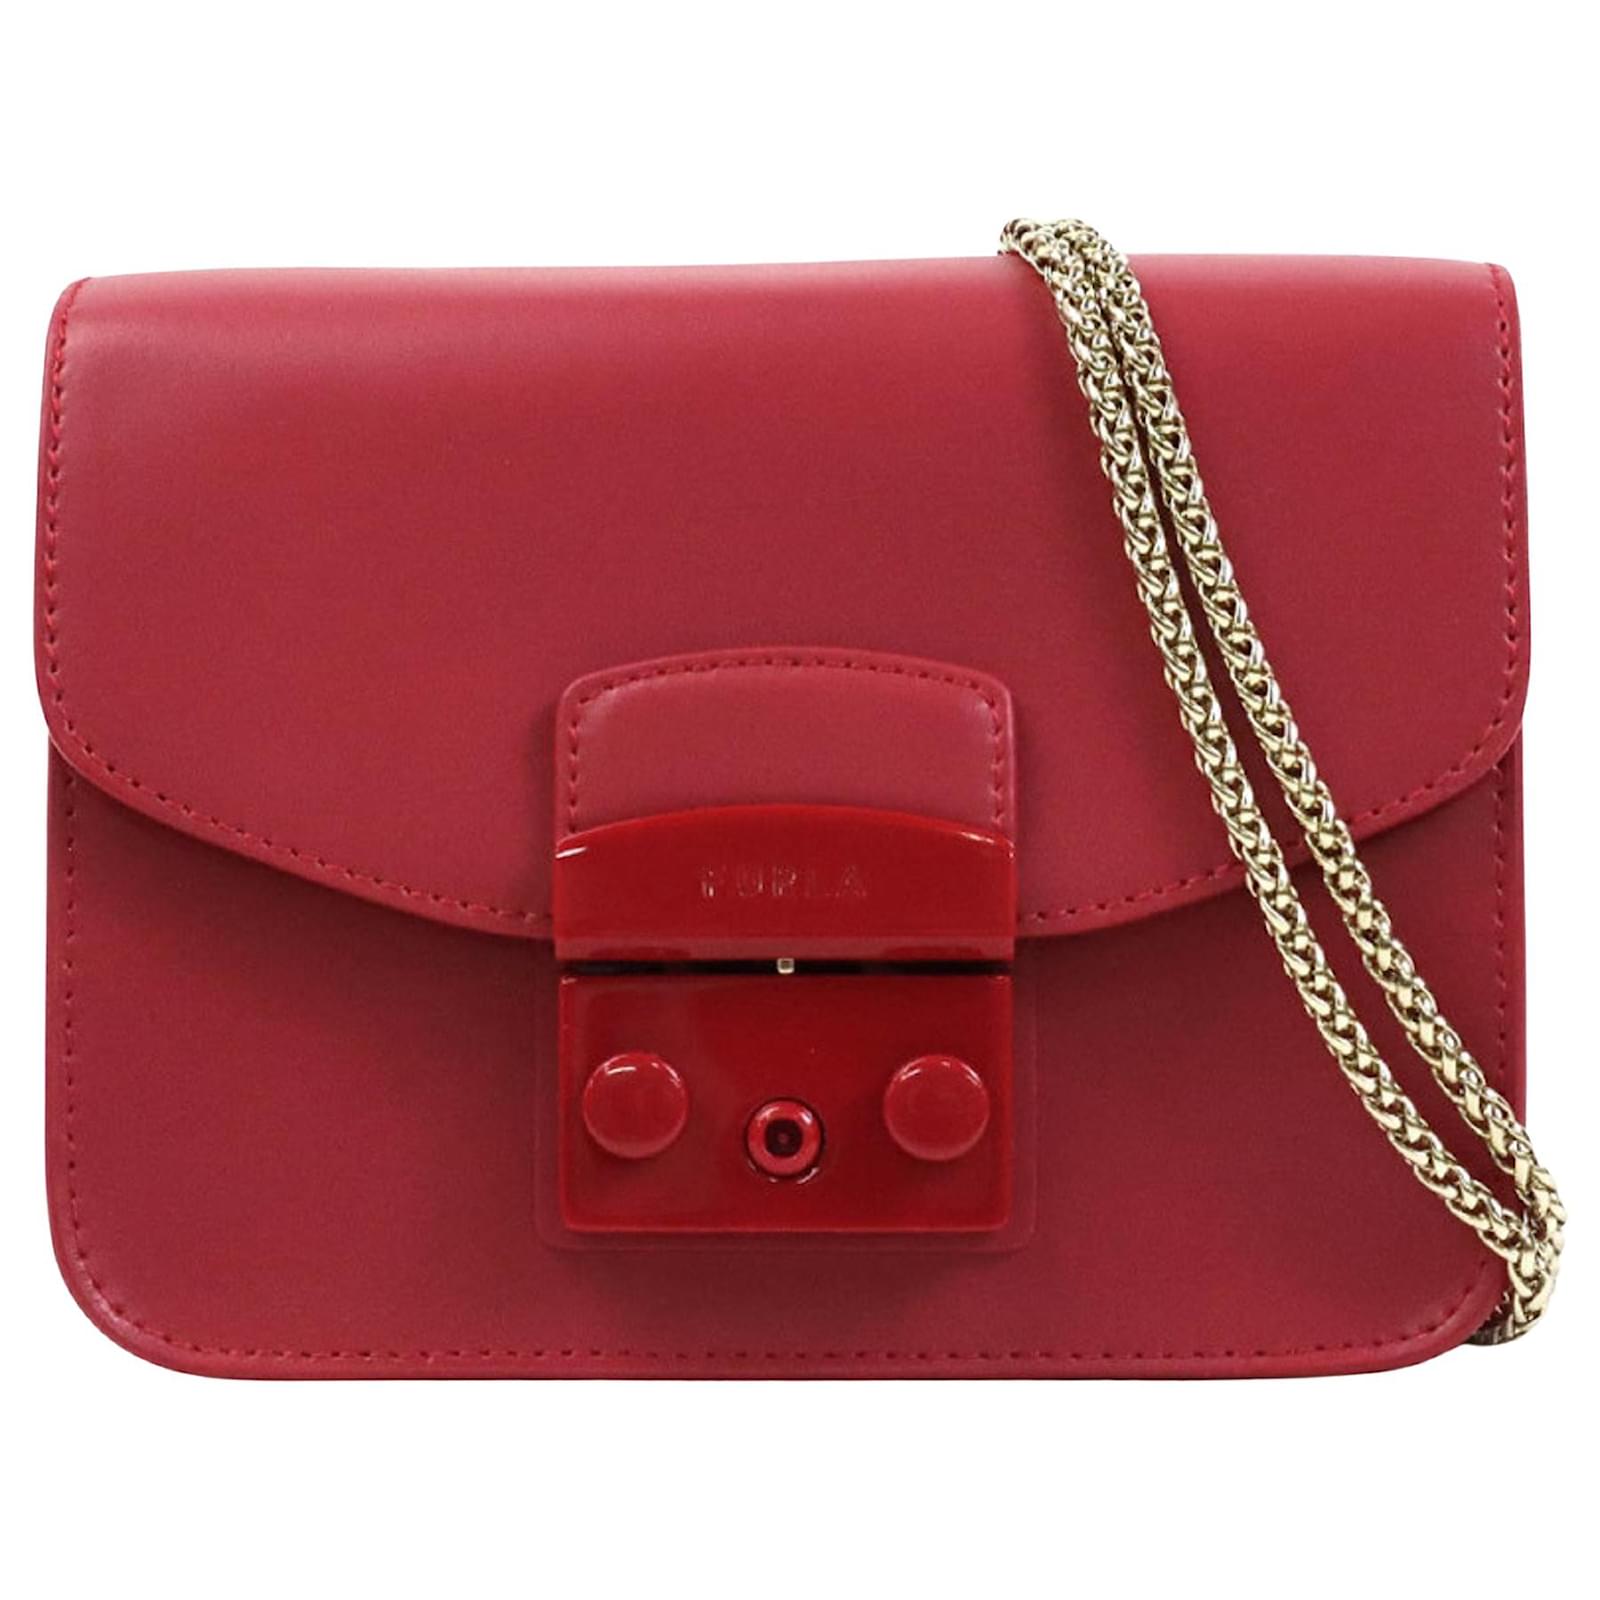 Furla Metropolis Ladies Small Red Kiss Leather Crossbody Bag 1007248 | eBay